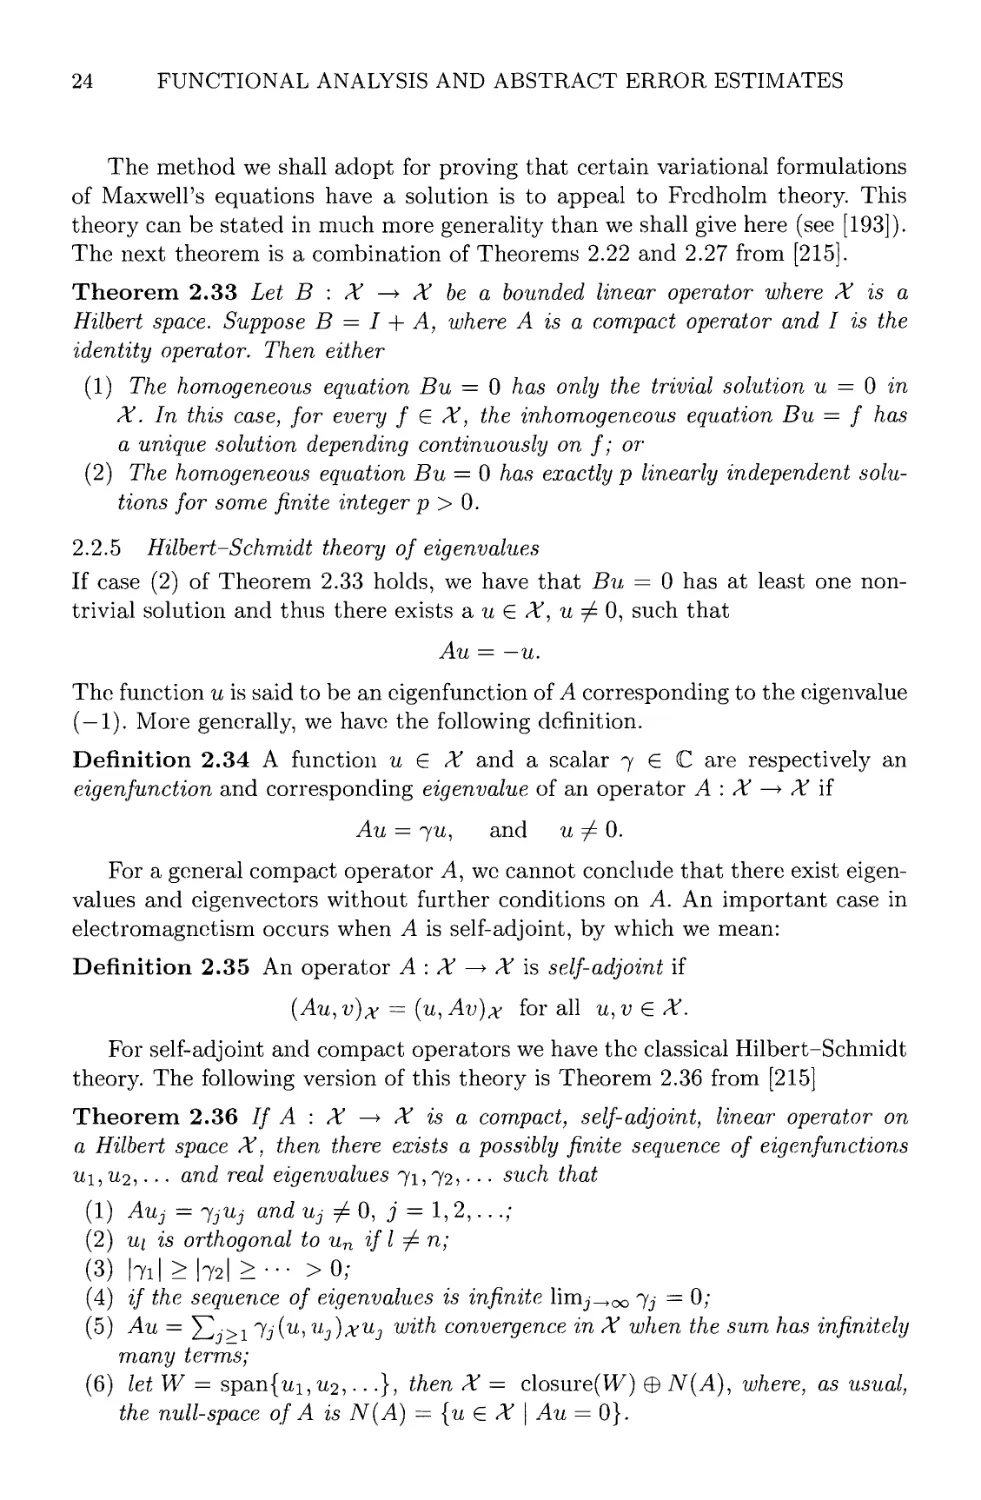 2.2.5 Hilbert-Schmidt theory of eigenvalues